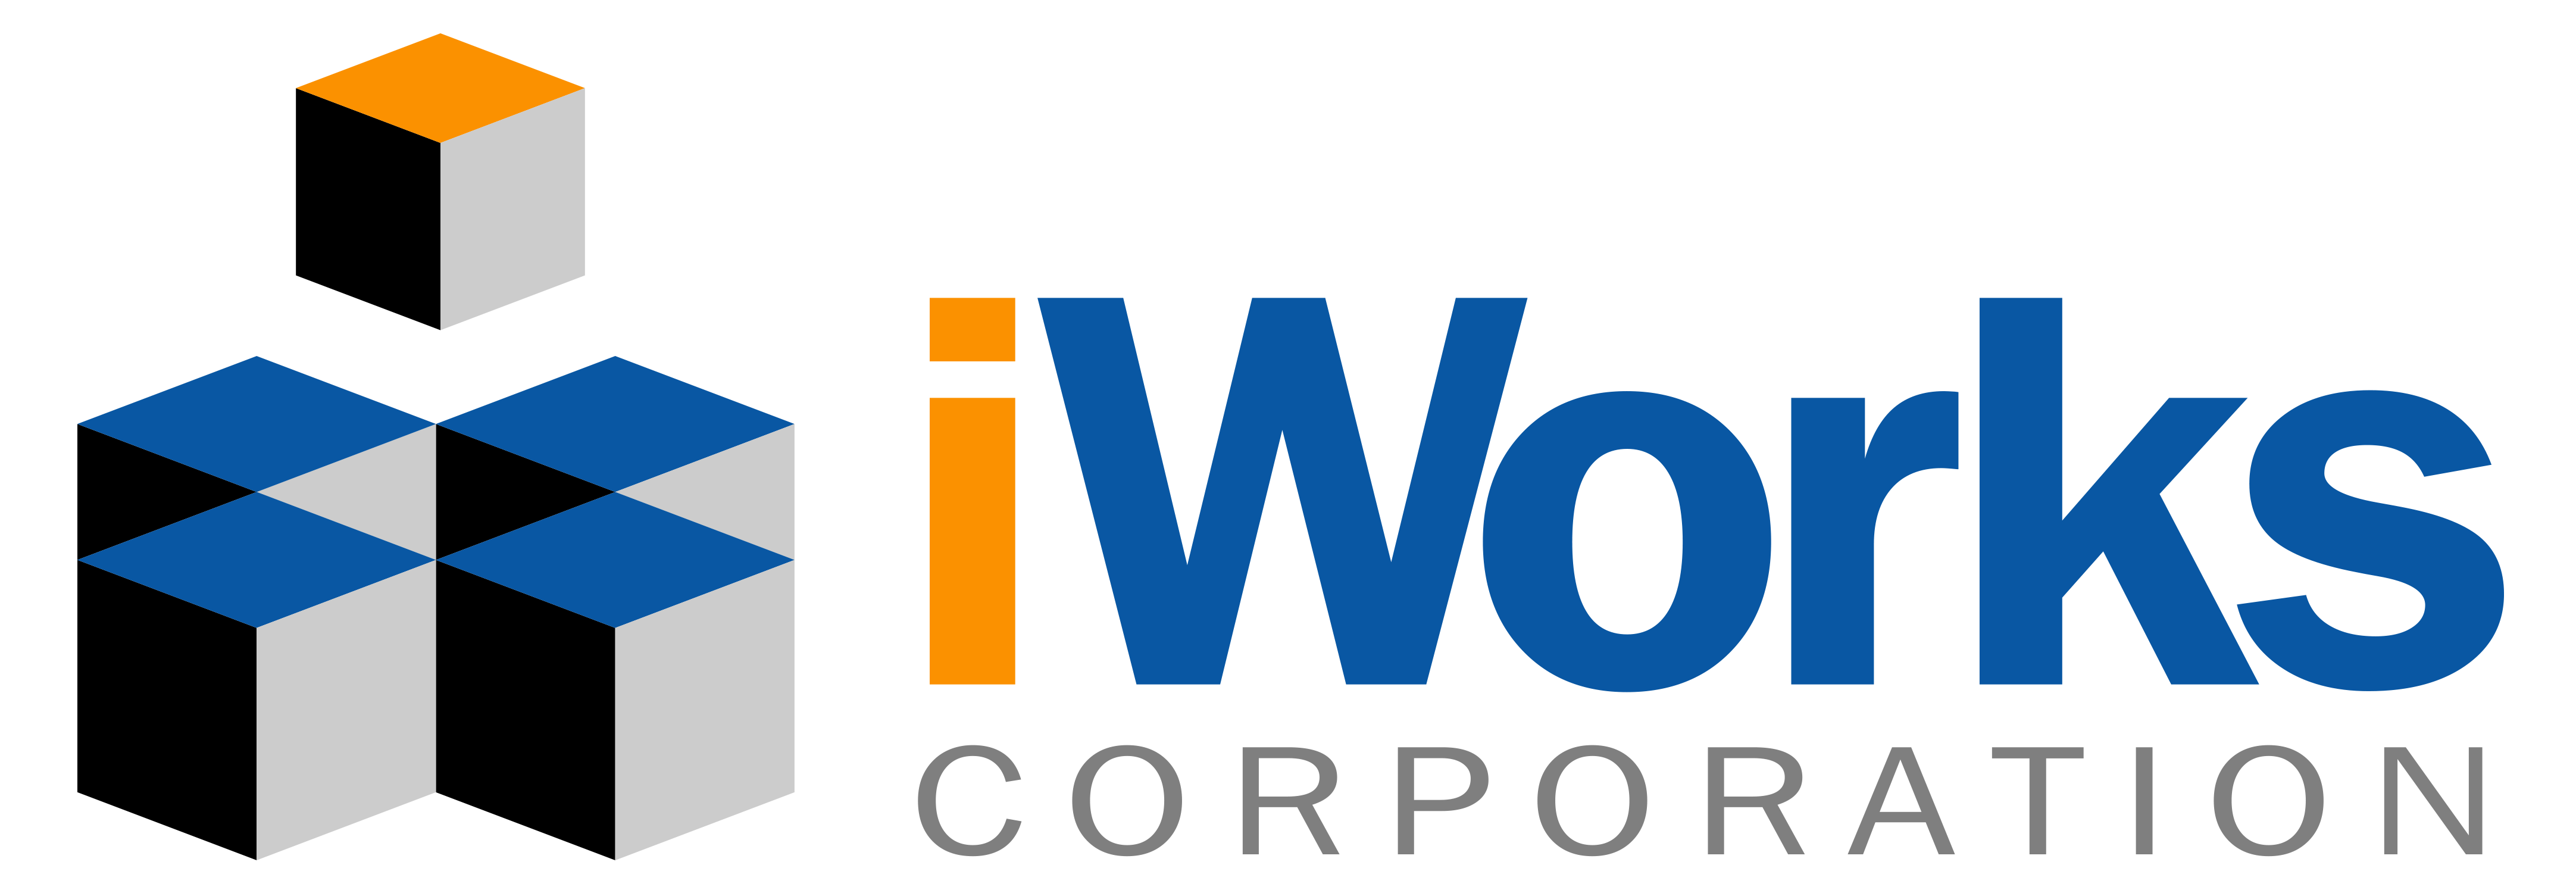 iWorks Corporation Company Logo